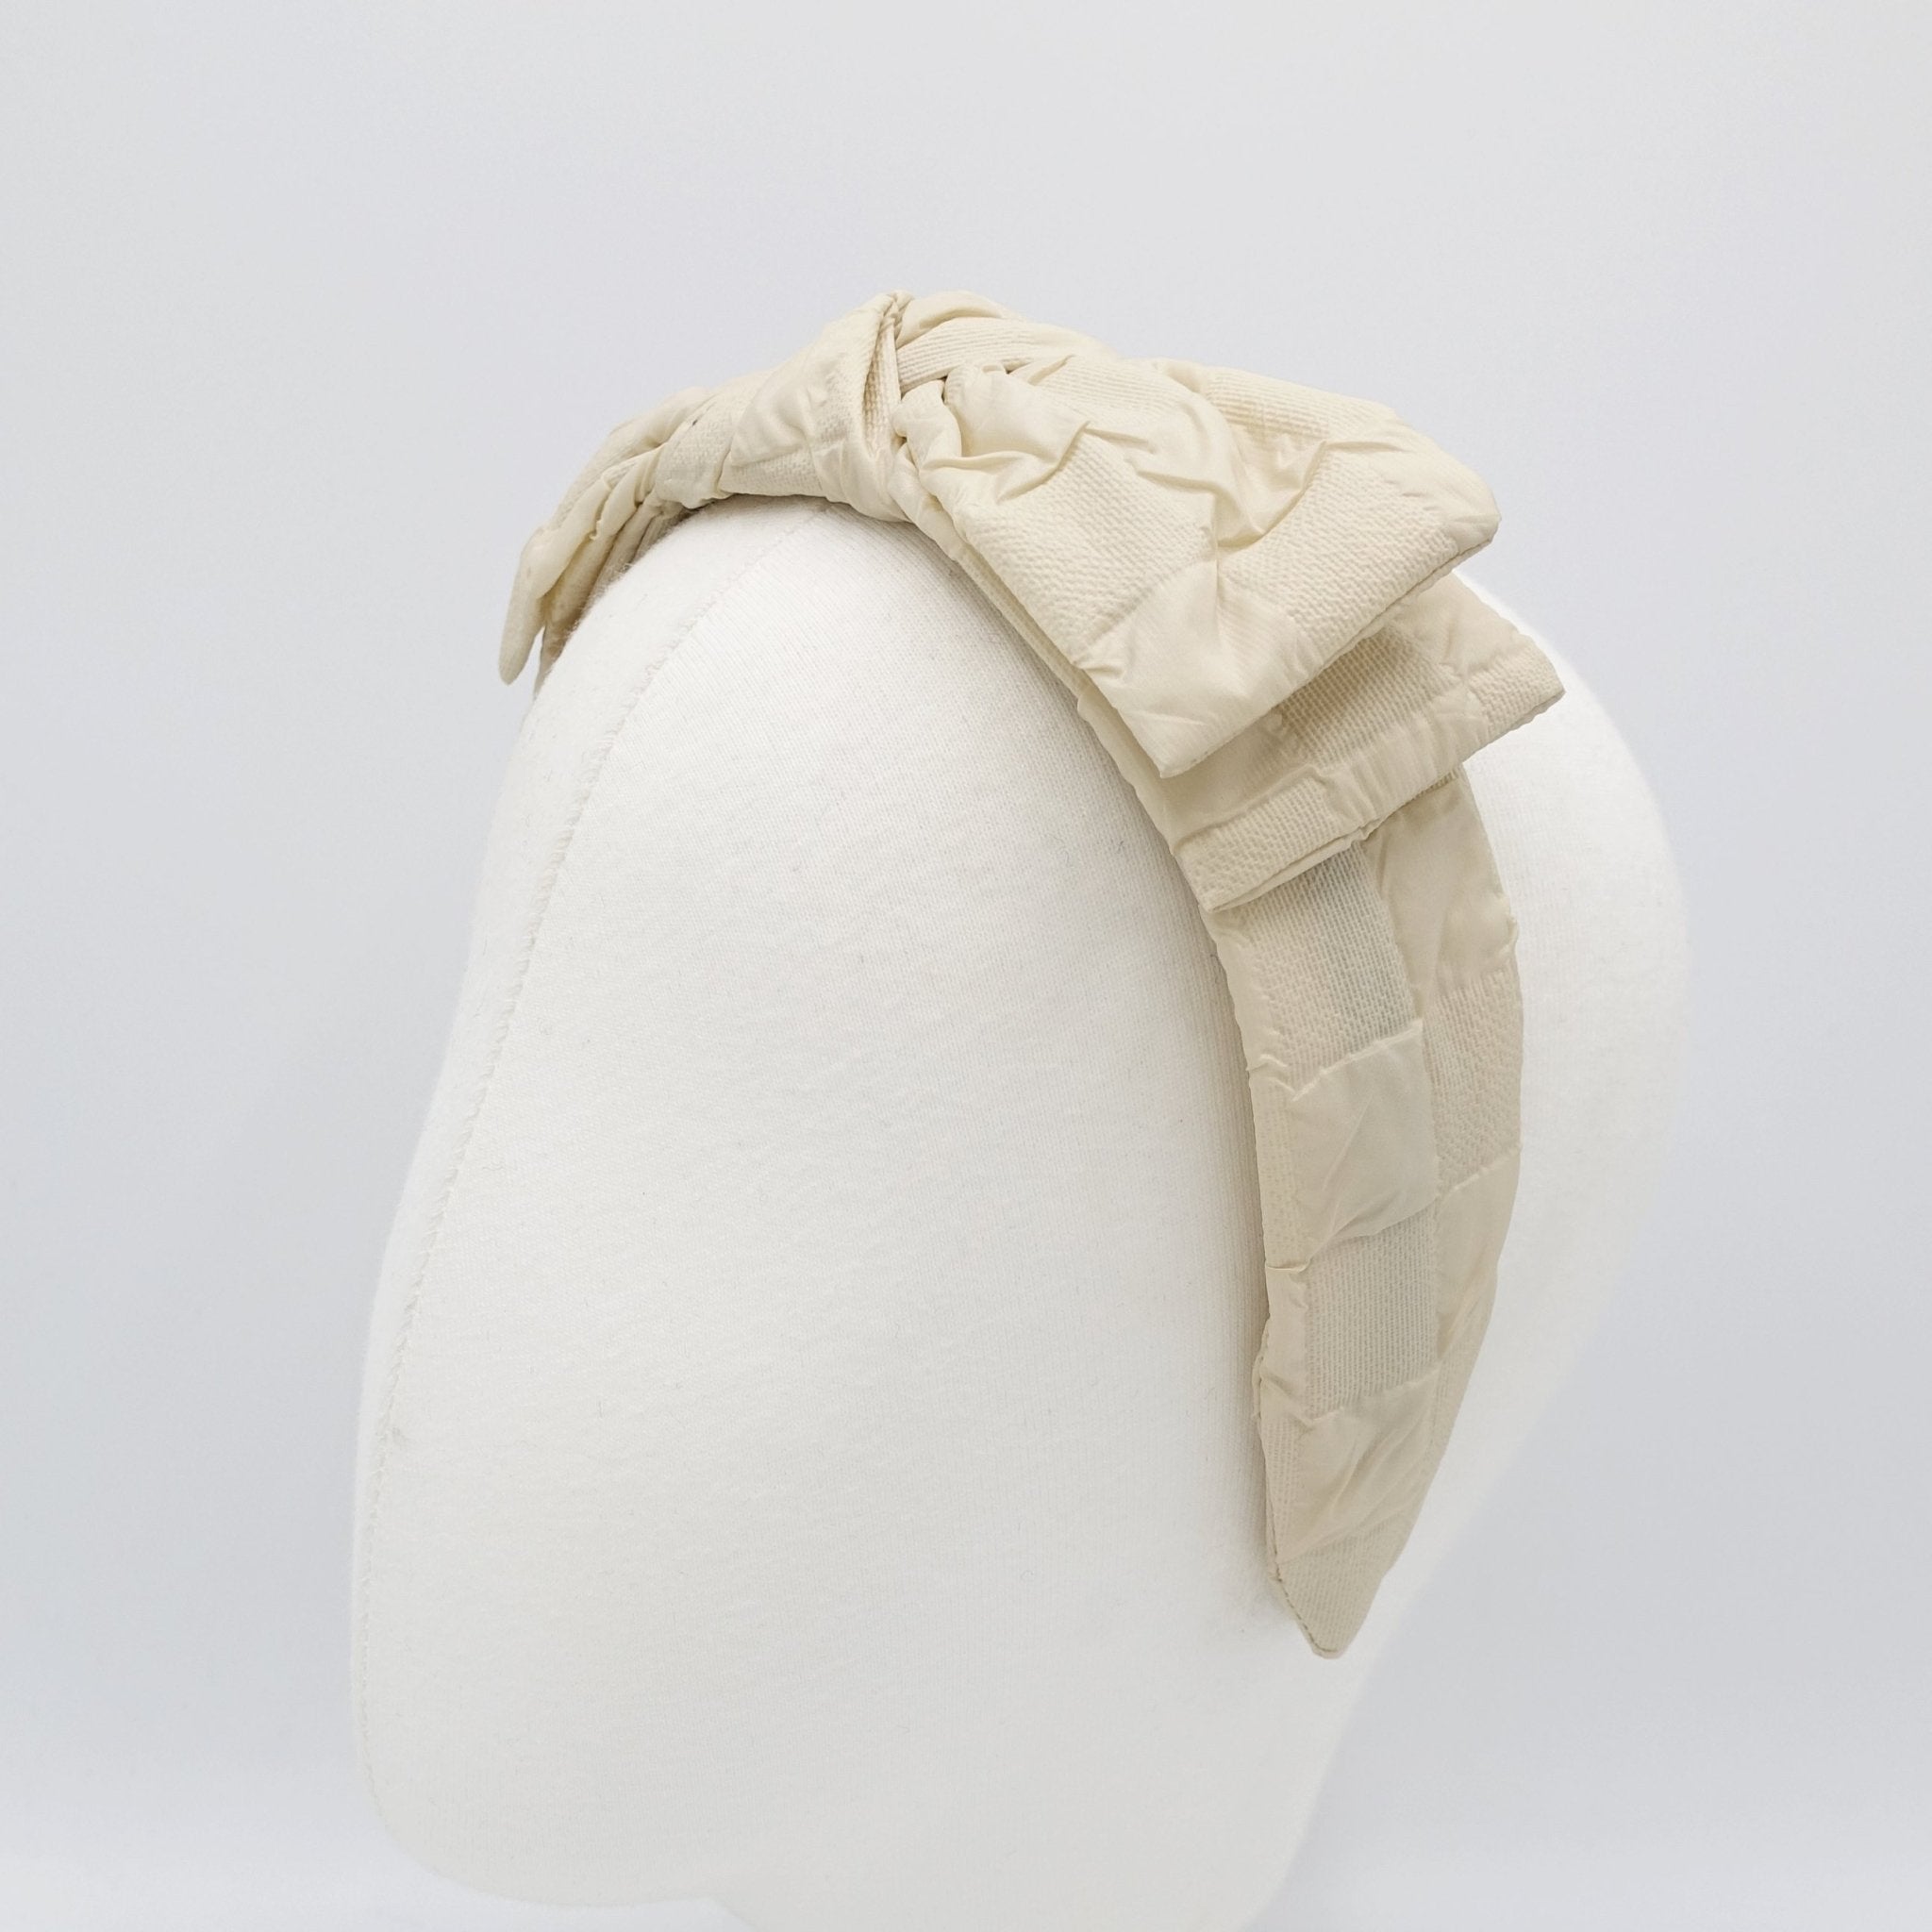 VeryShine padding bow knot headband wired pattern Fall Winter Stylish hair accessory for women